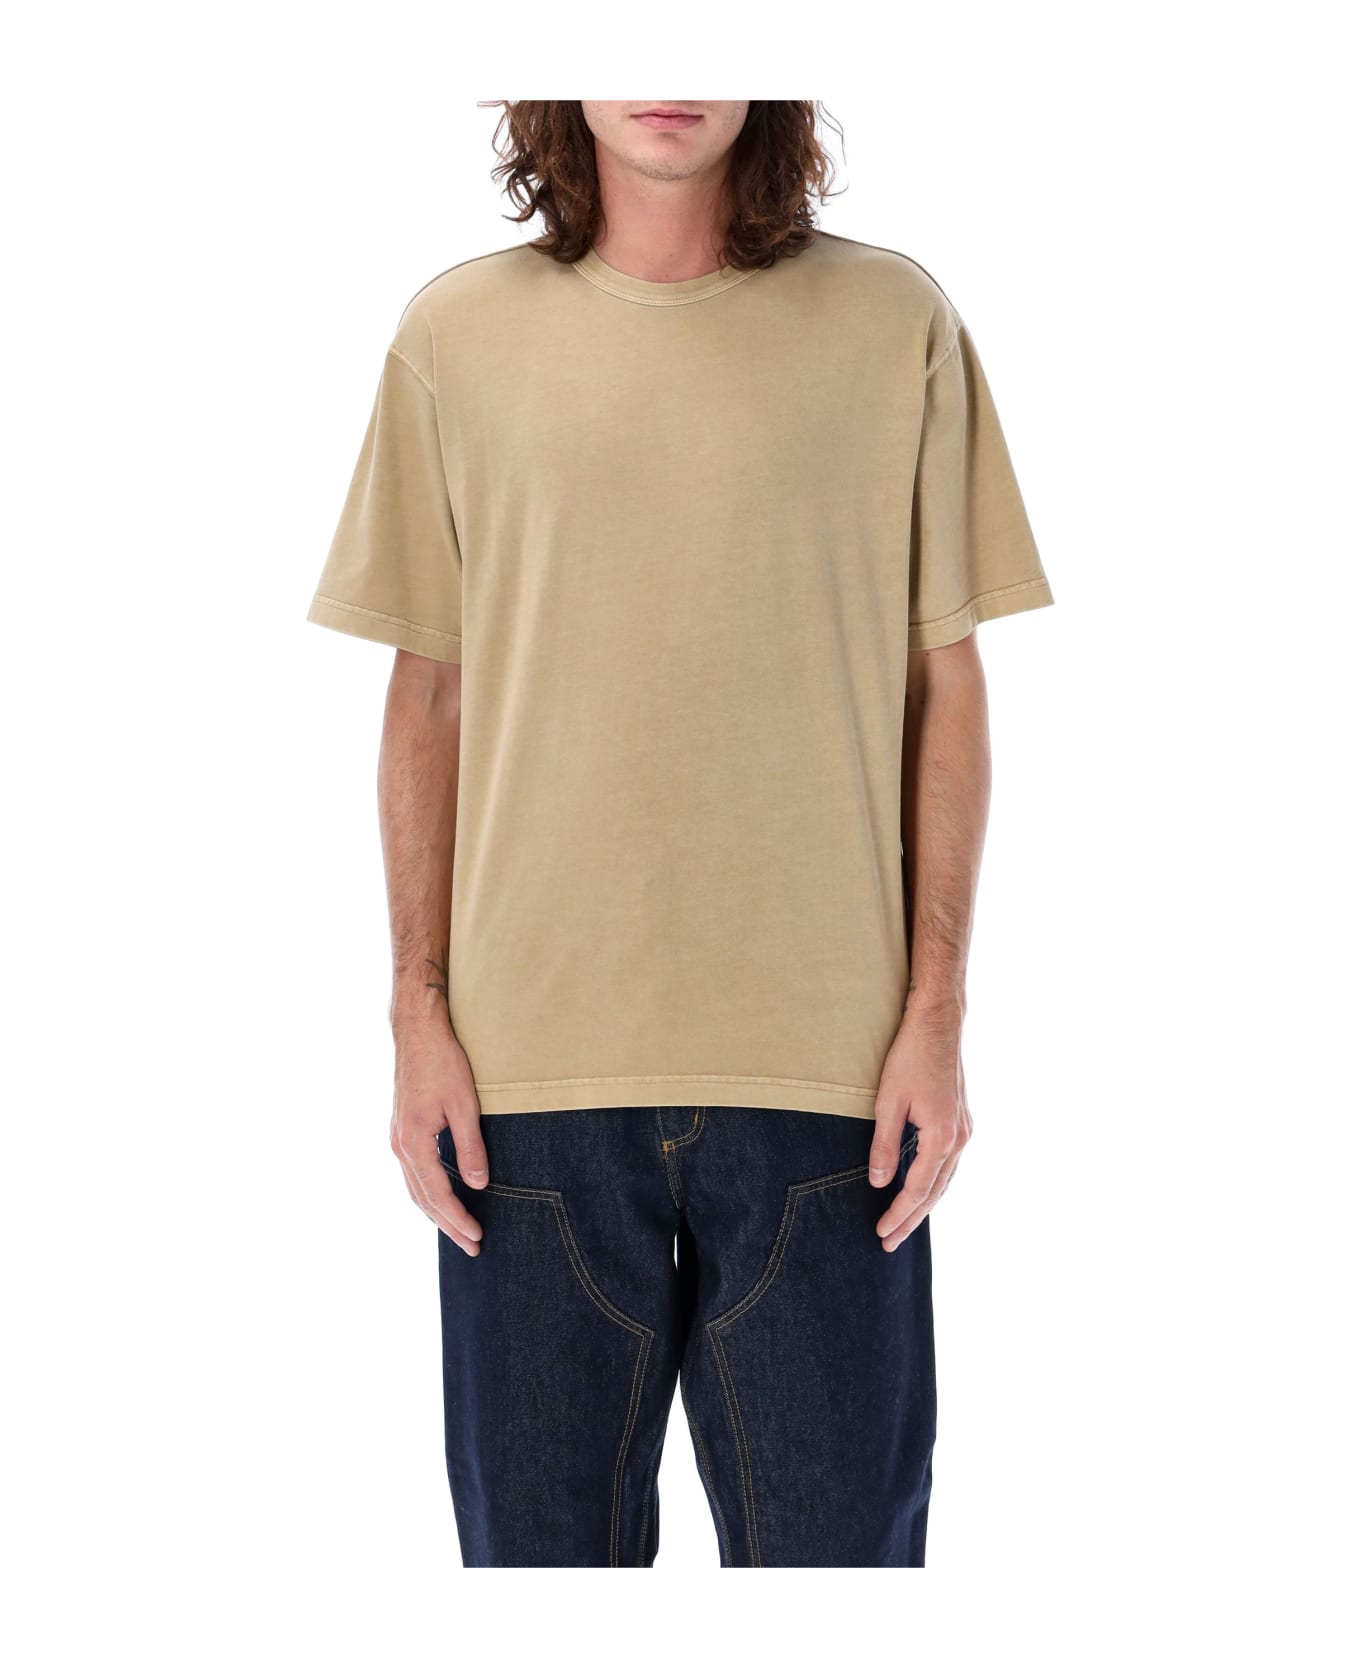 Carhartt Taos T-shirt - SABLE